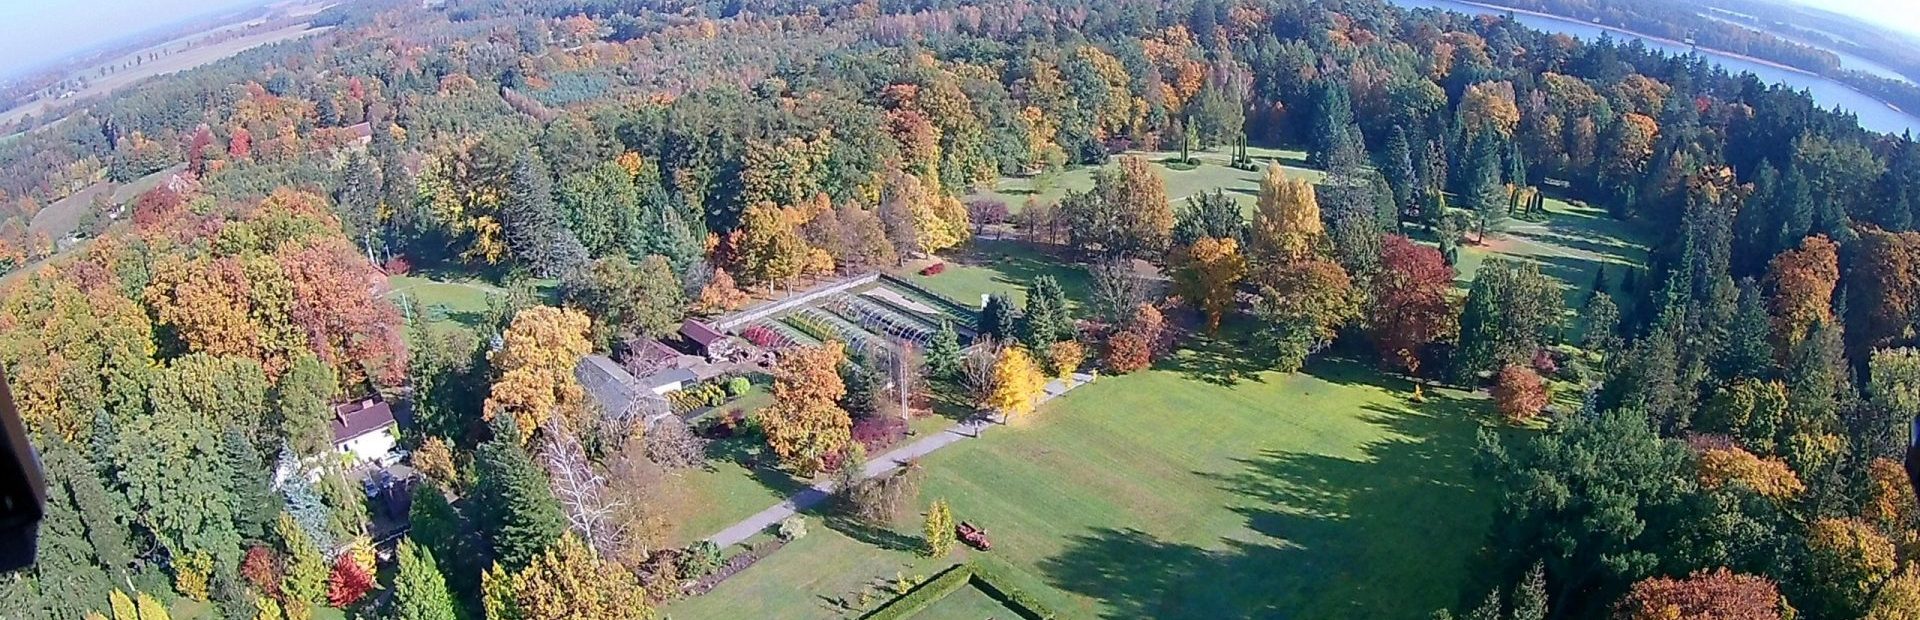 The Wirty Arboretum